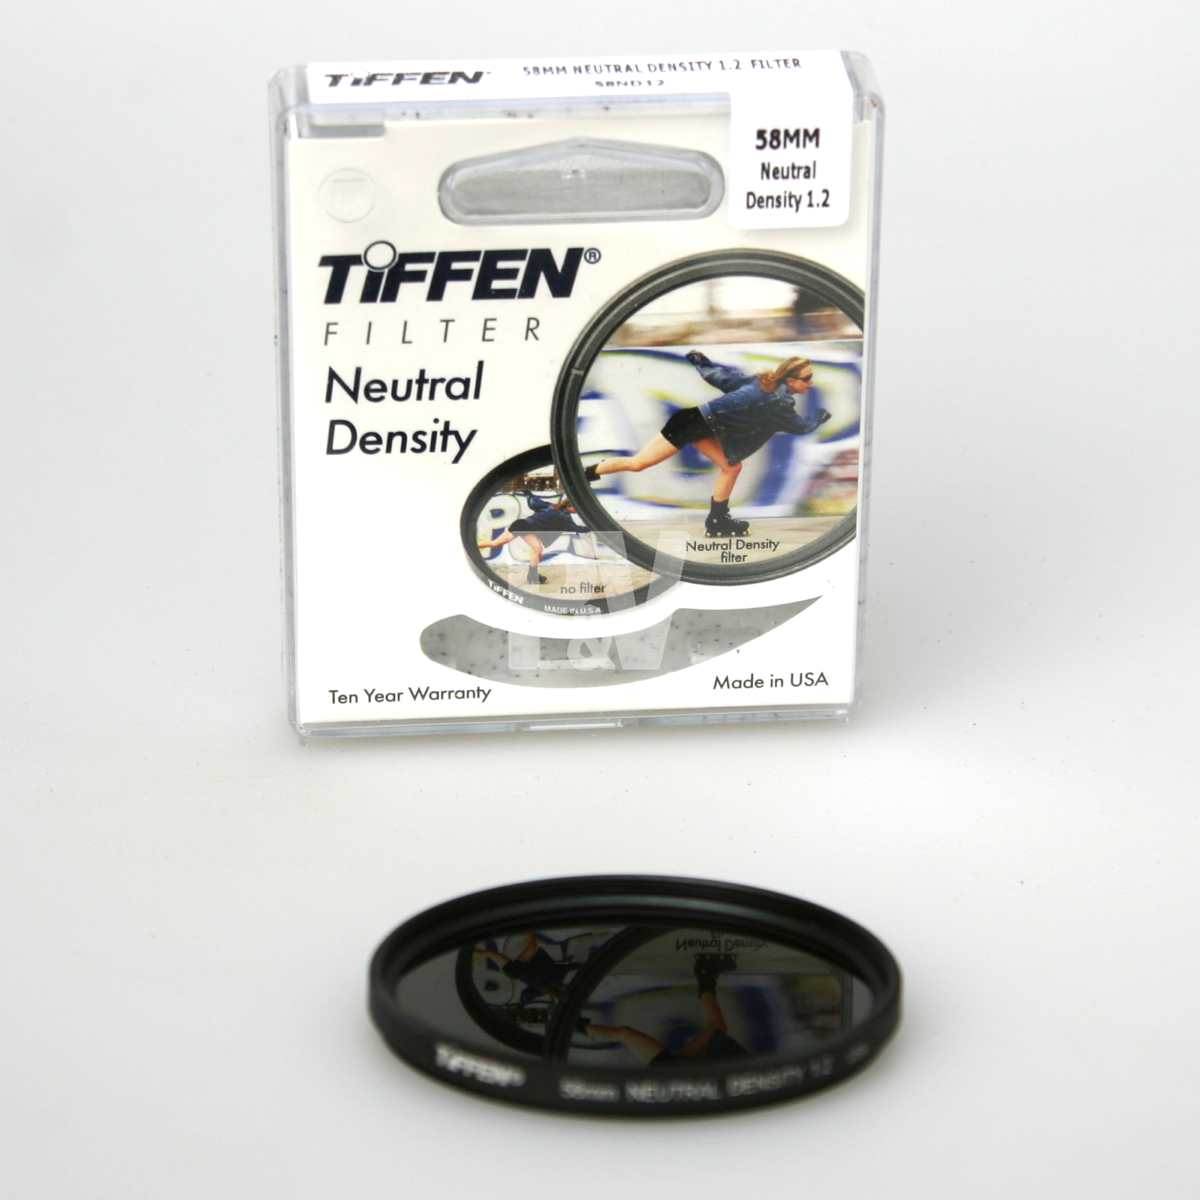 Tiffen 58MM NEUTRAL DENSITY 1.2 (4 Stop) Filter